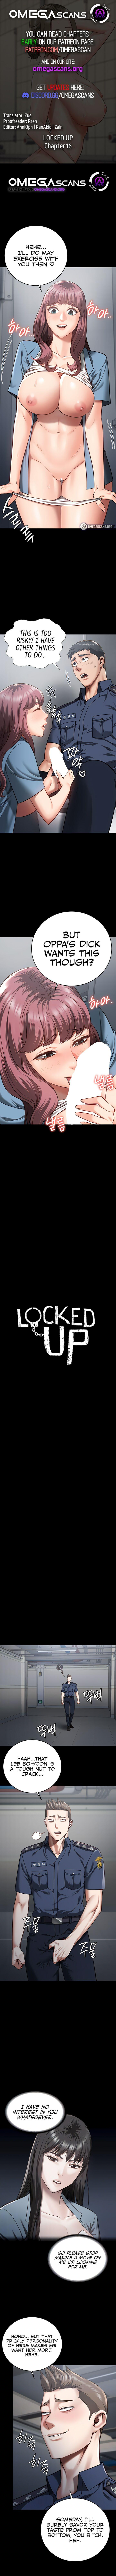 Locked Up 152